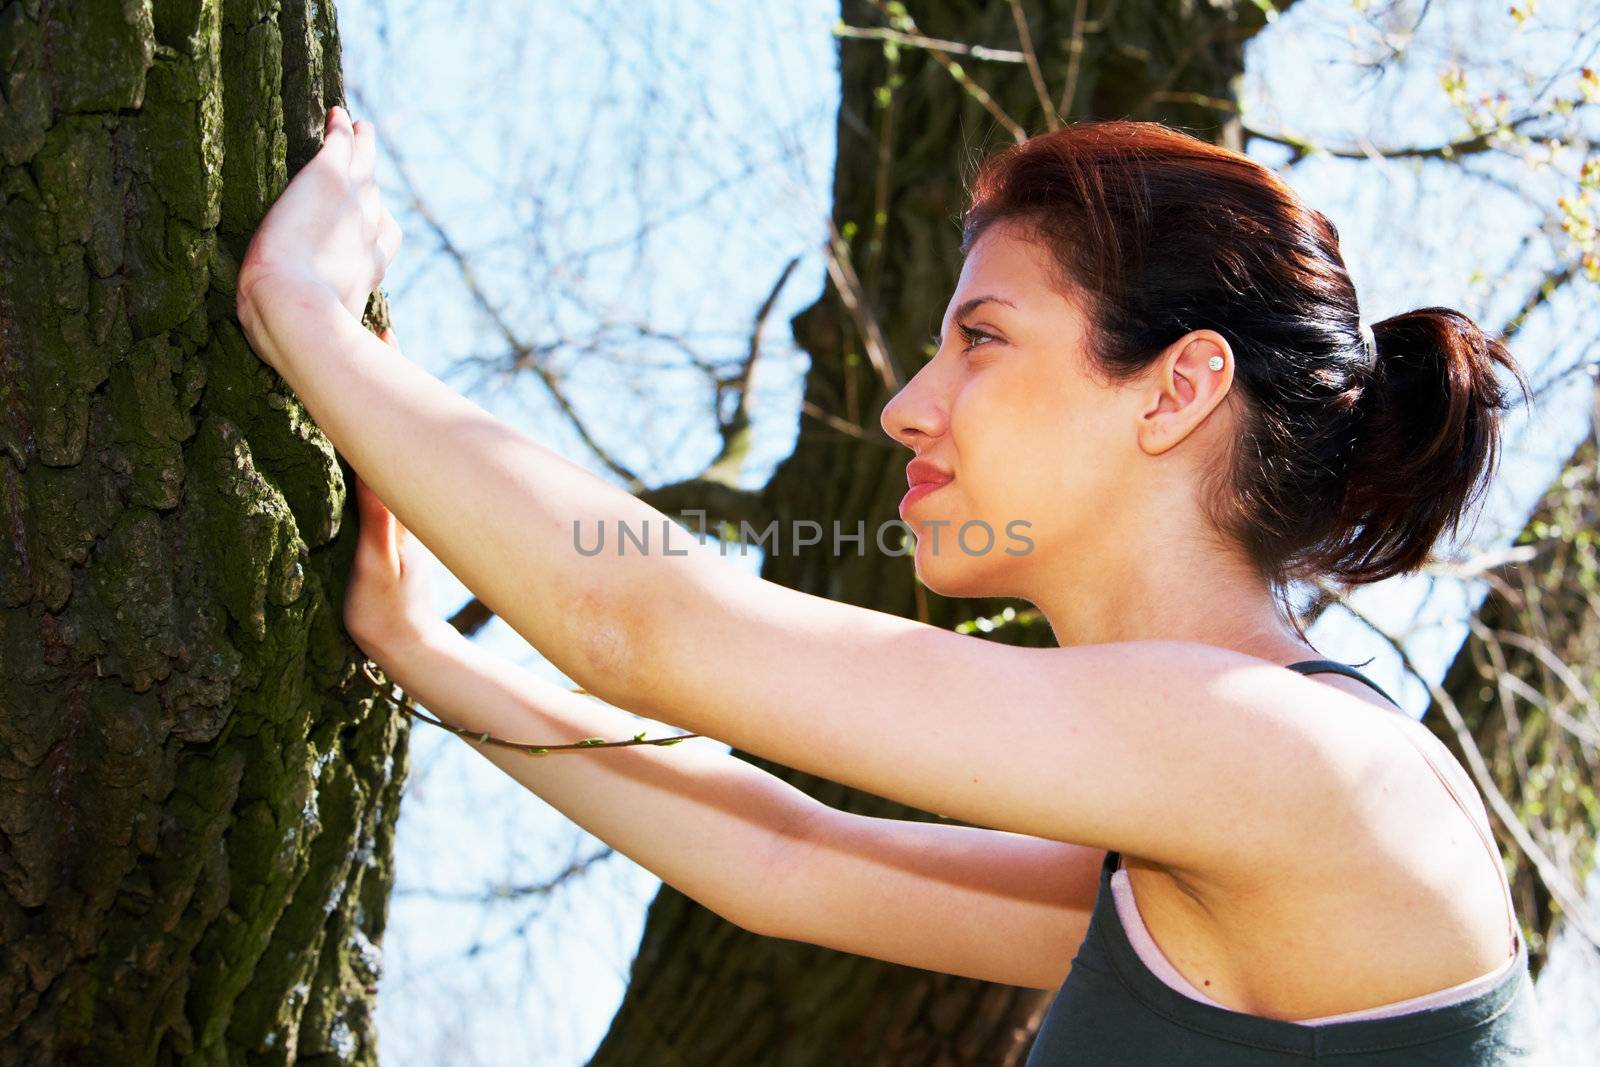 Jogging teenage girl stretching using tree, side profile